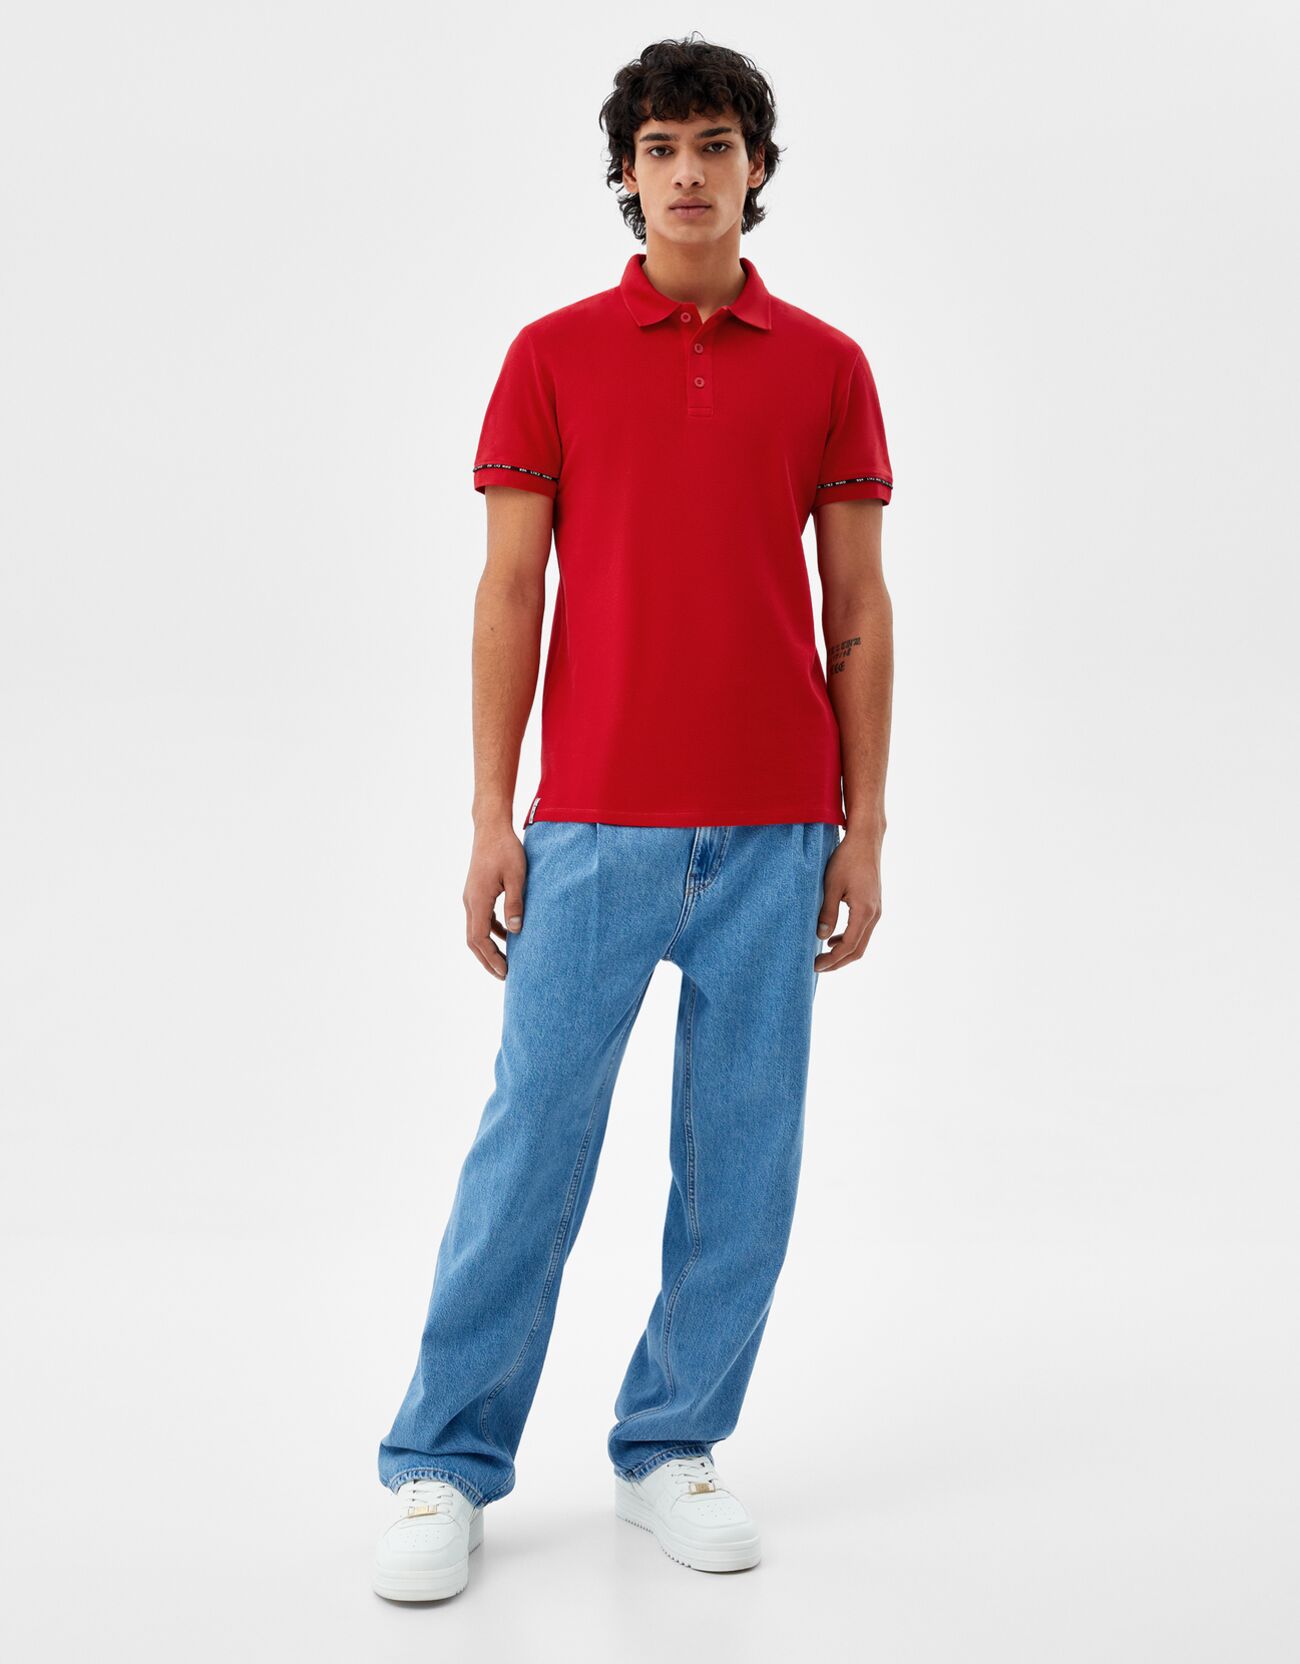 Bershka Camiseta Manga Corta Polo Piqué Hombre S Rojo